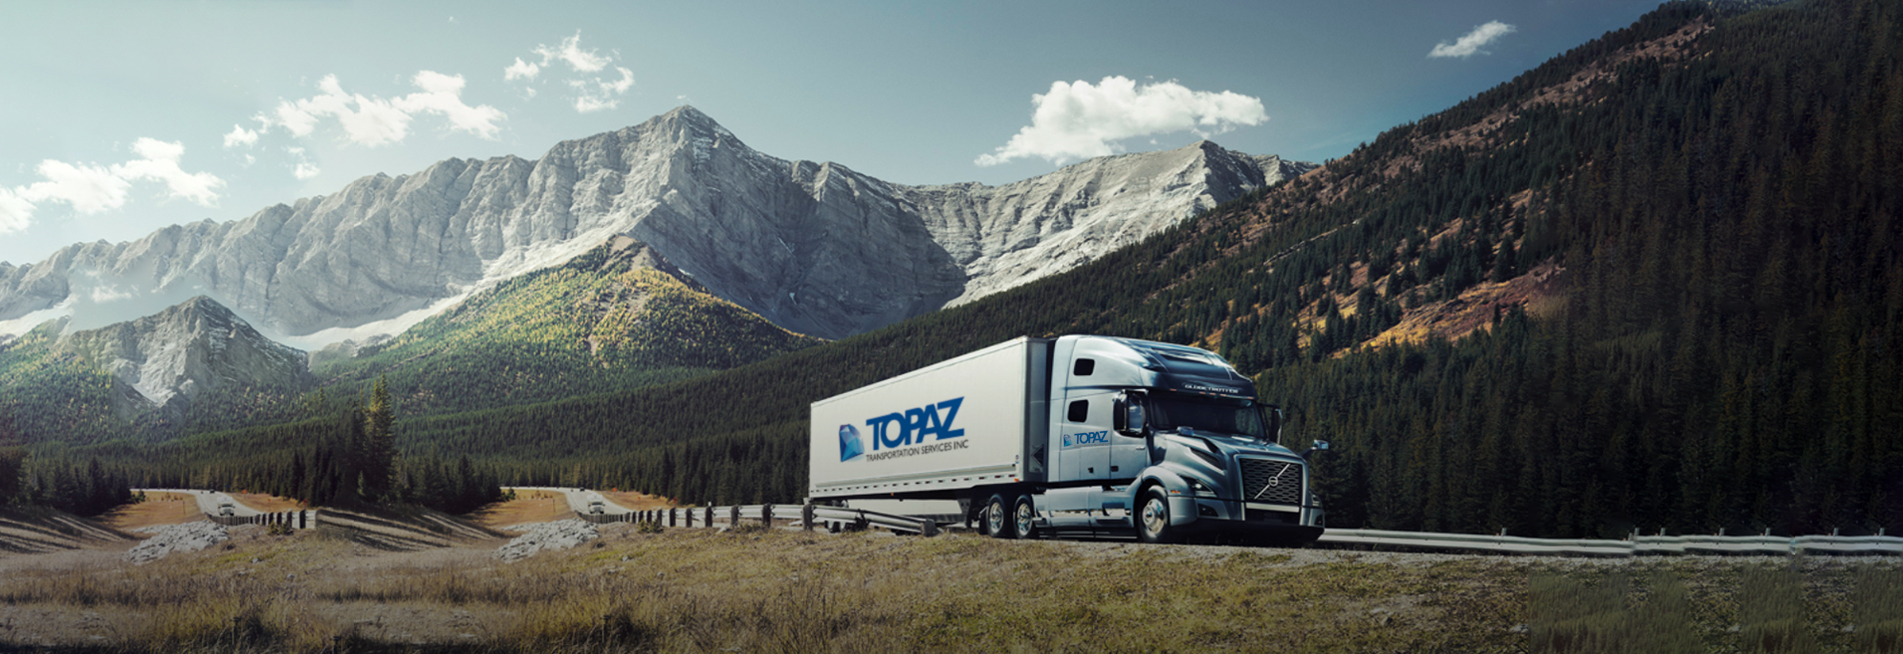 Topaz Transportation